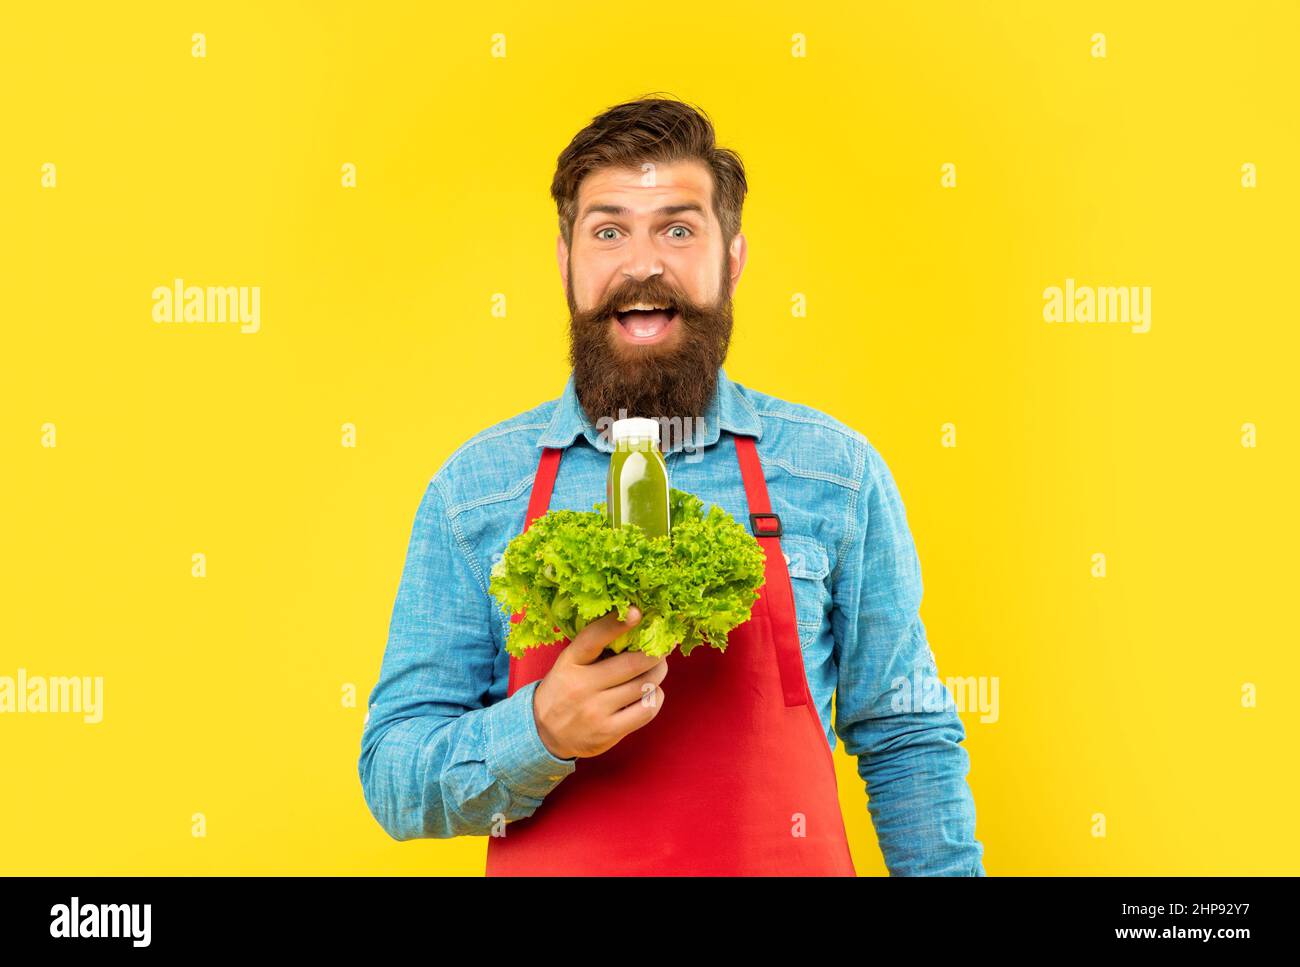 Surprised man in apron holding fresh lettuce and juice bottle yellow background, juice barkeeper Stock Photo